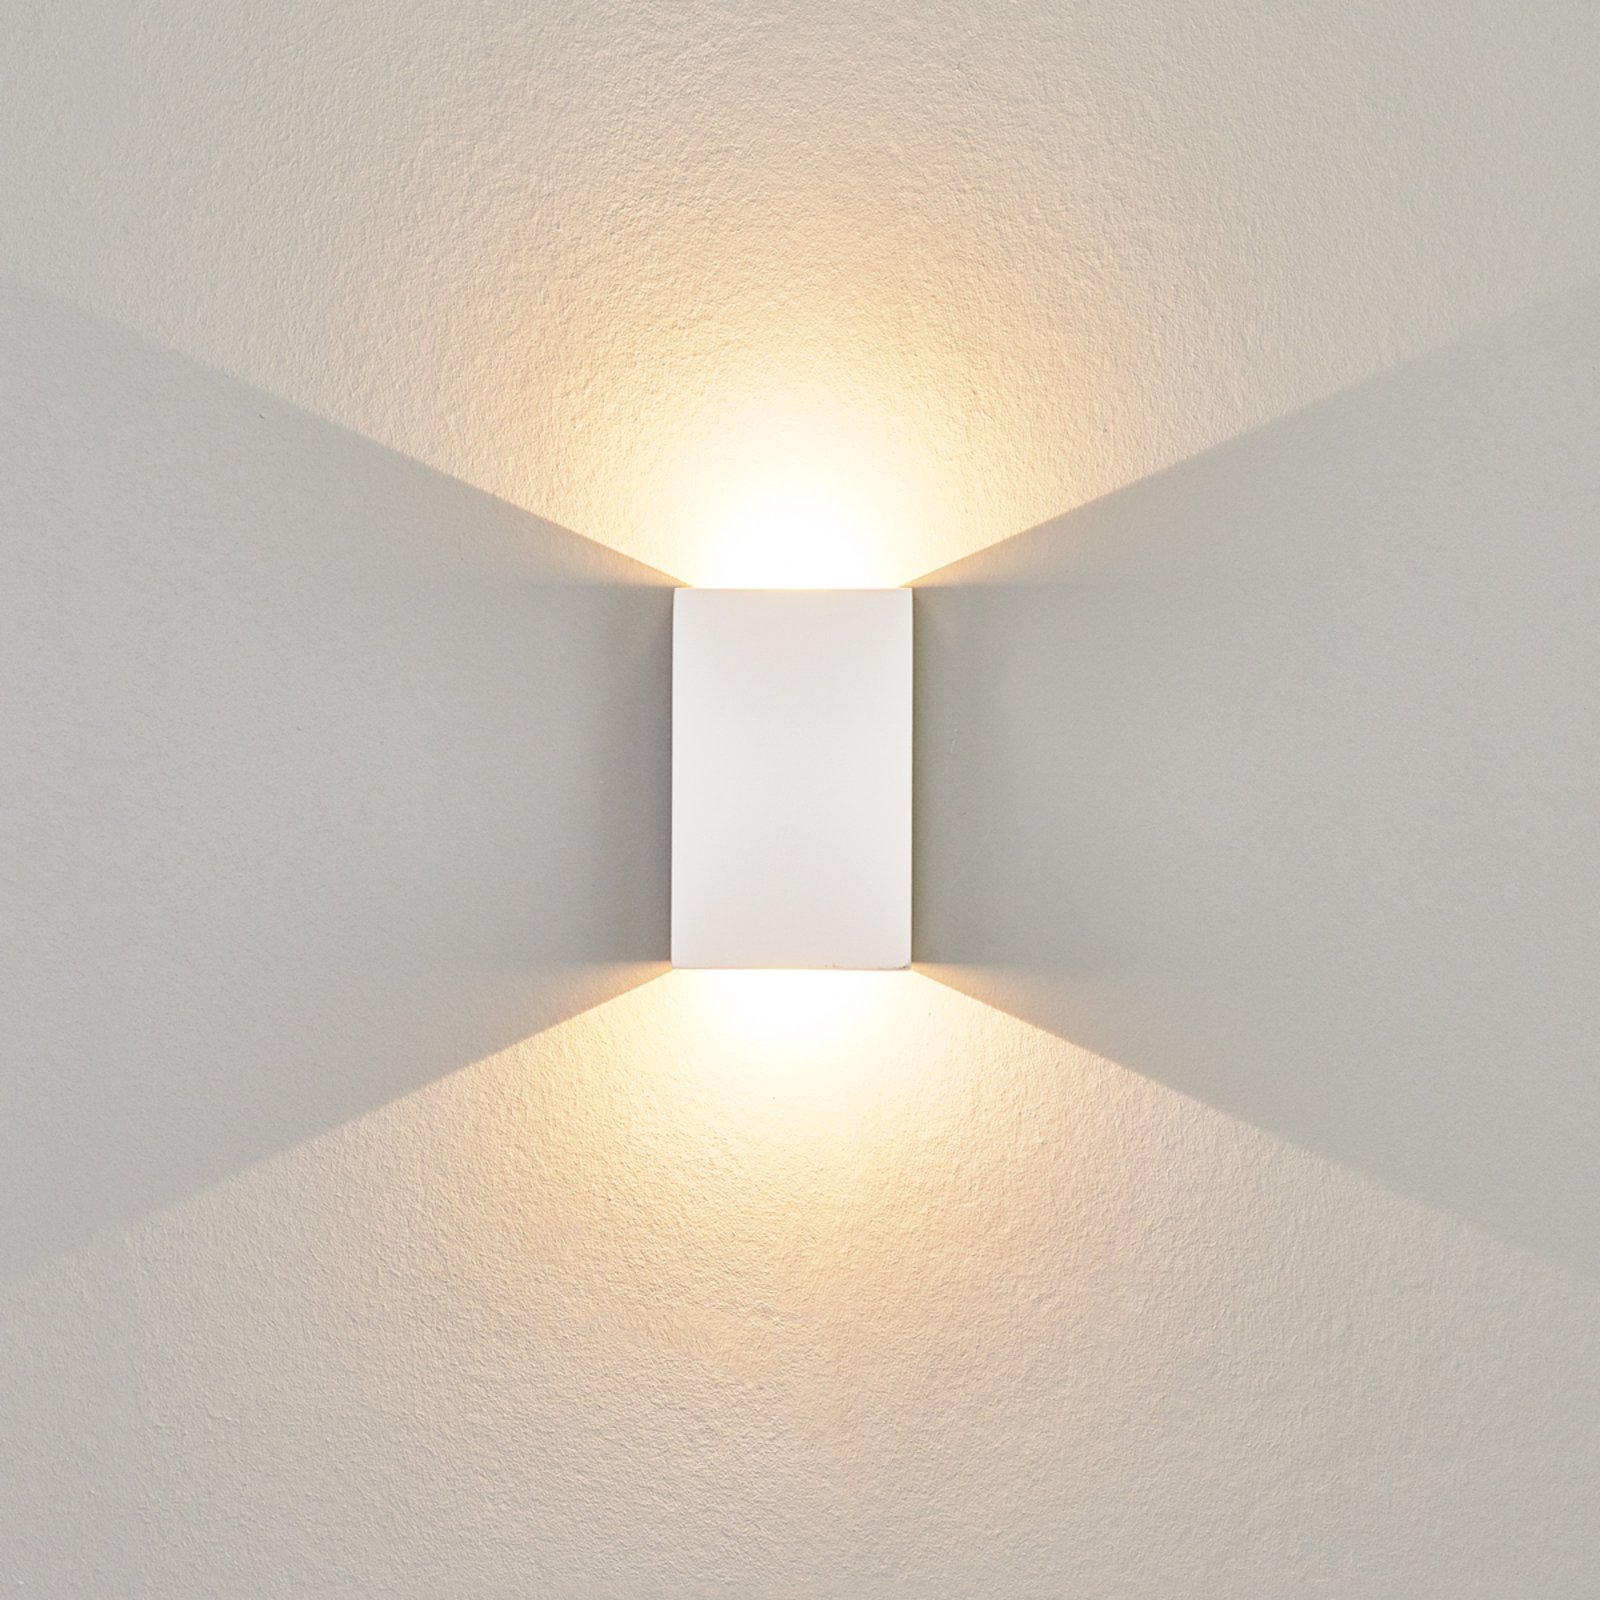 Fabiola LED wall light, plaster, height 16 cm